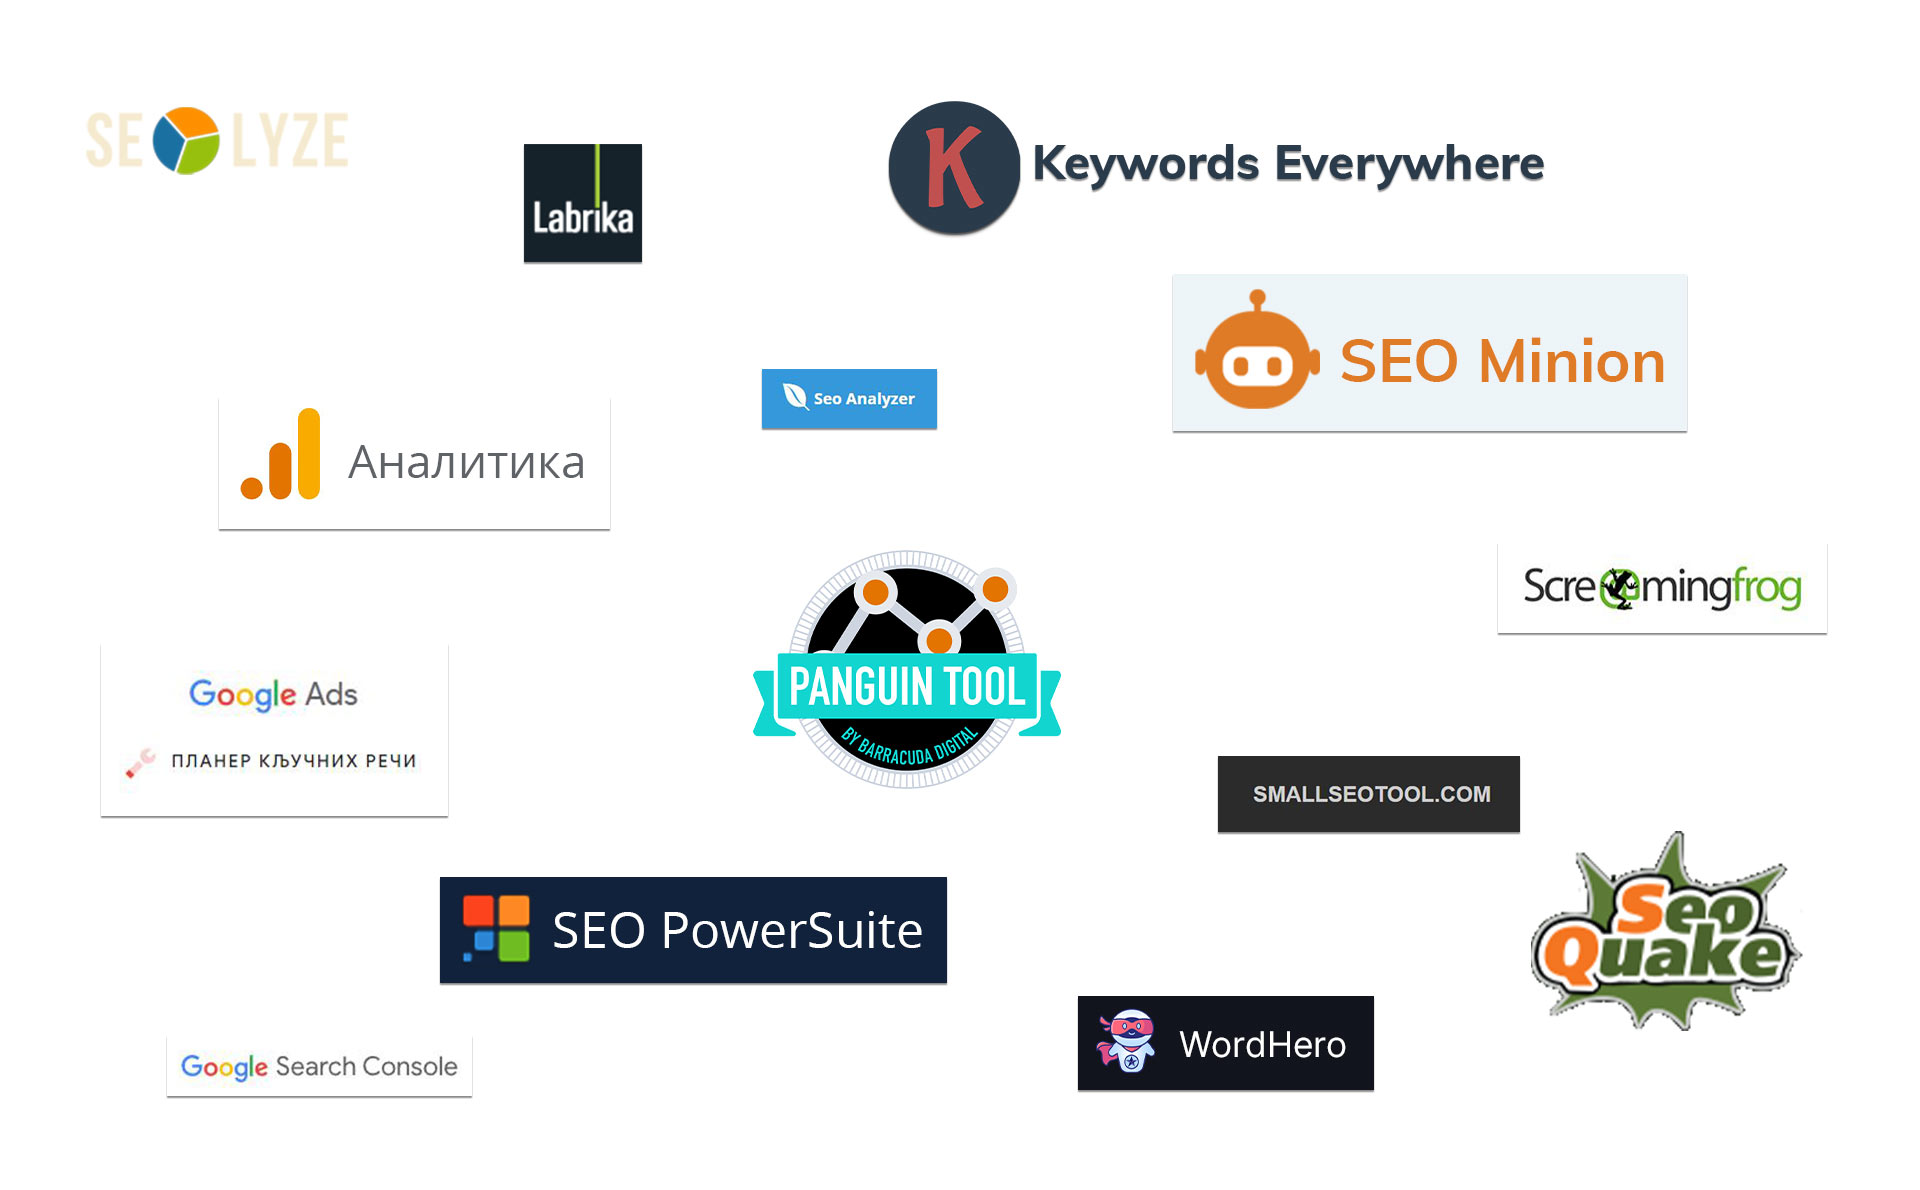 Najbolji SEO alati i plug-inovi: Google Analytics, Keywords Everywhere, Screaming Frog, WordHero, SEOlyze, Panguin Tool, i još mnogi drugi.